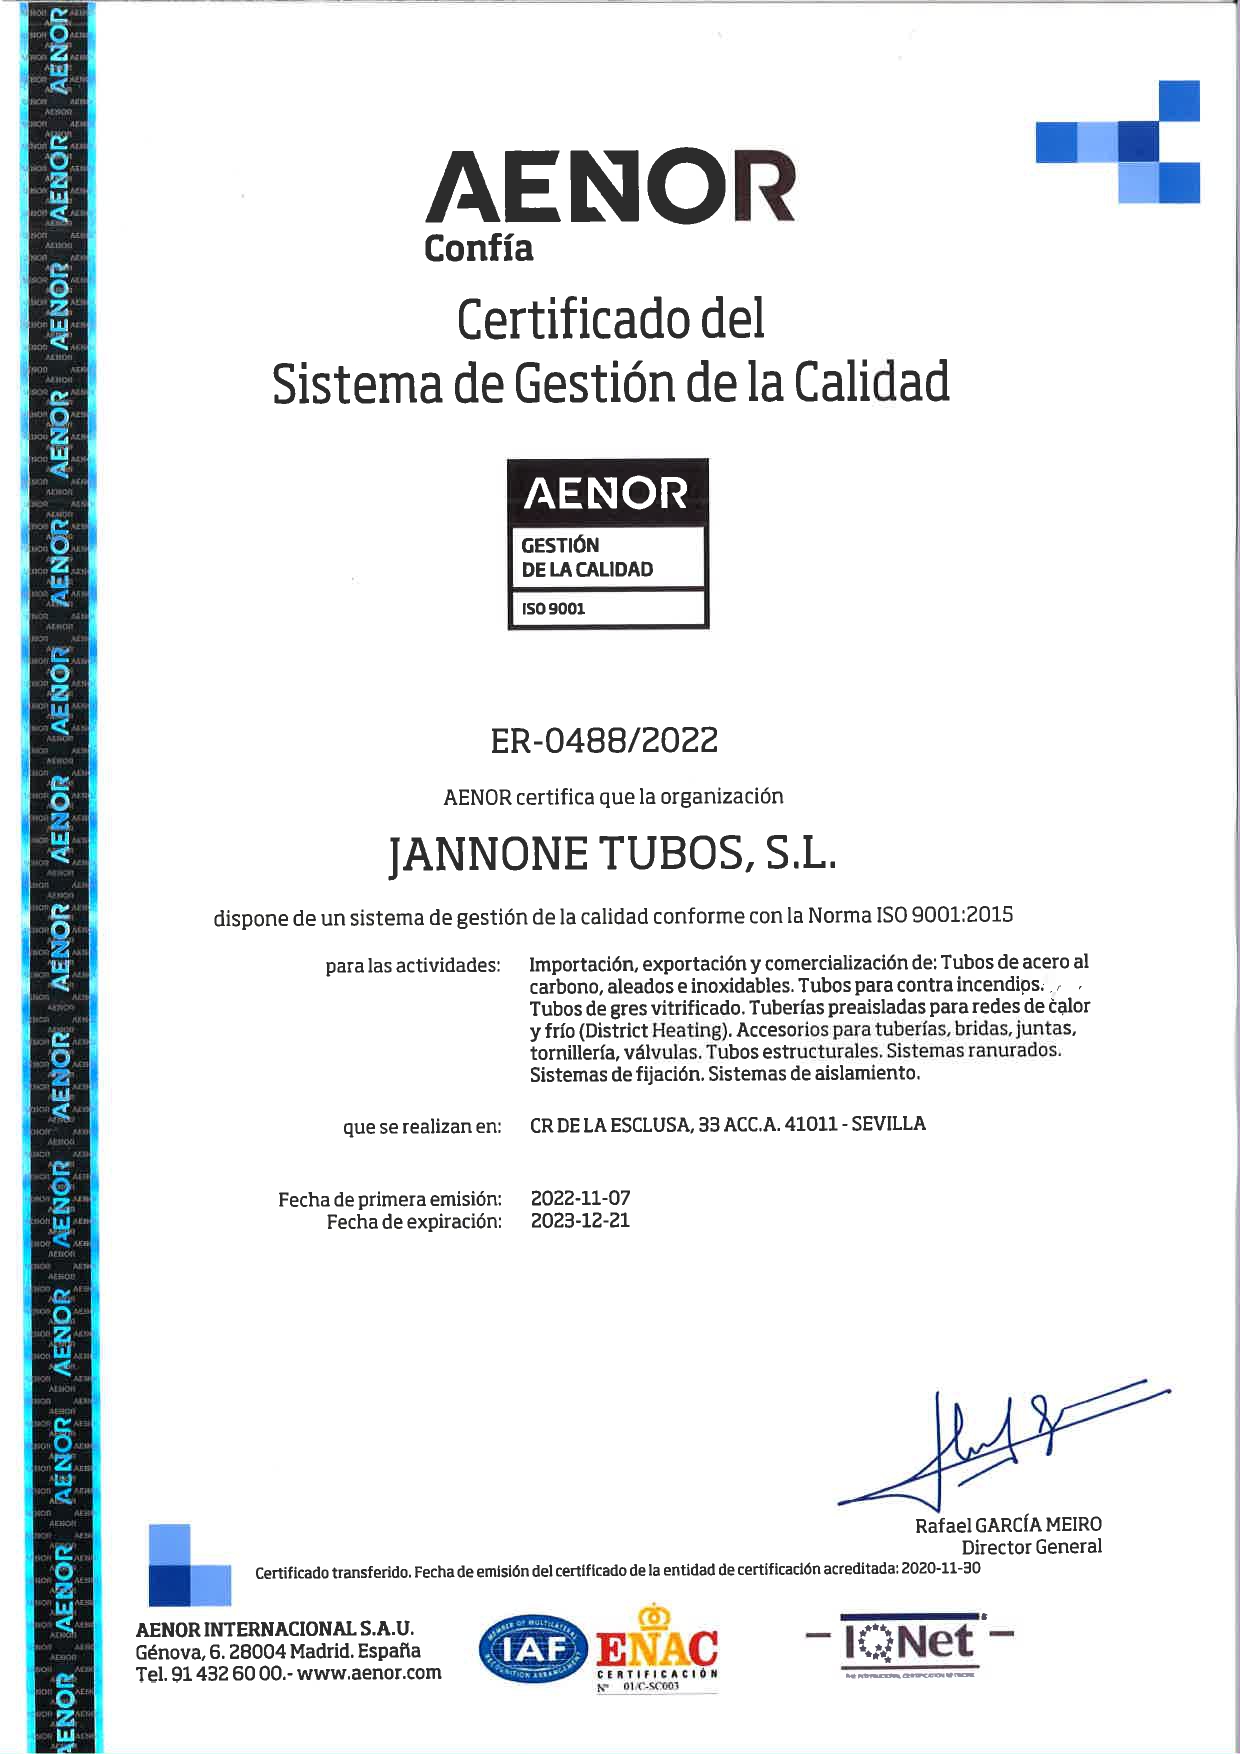 Jannone Tubos SL ha sido certificada por AENOR - Grupo Jannone